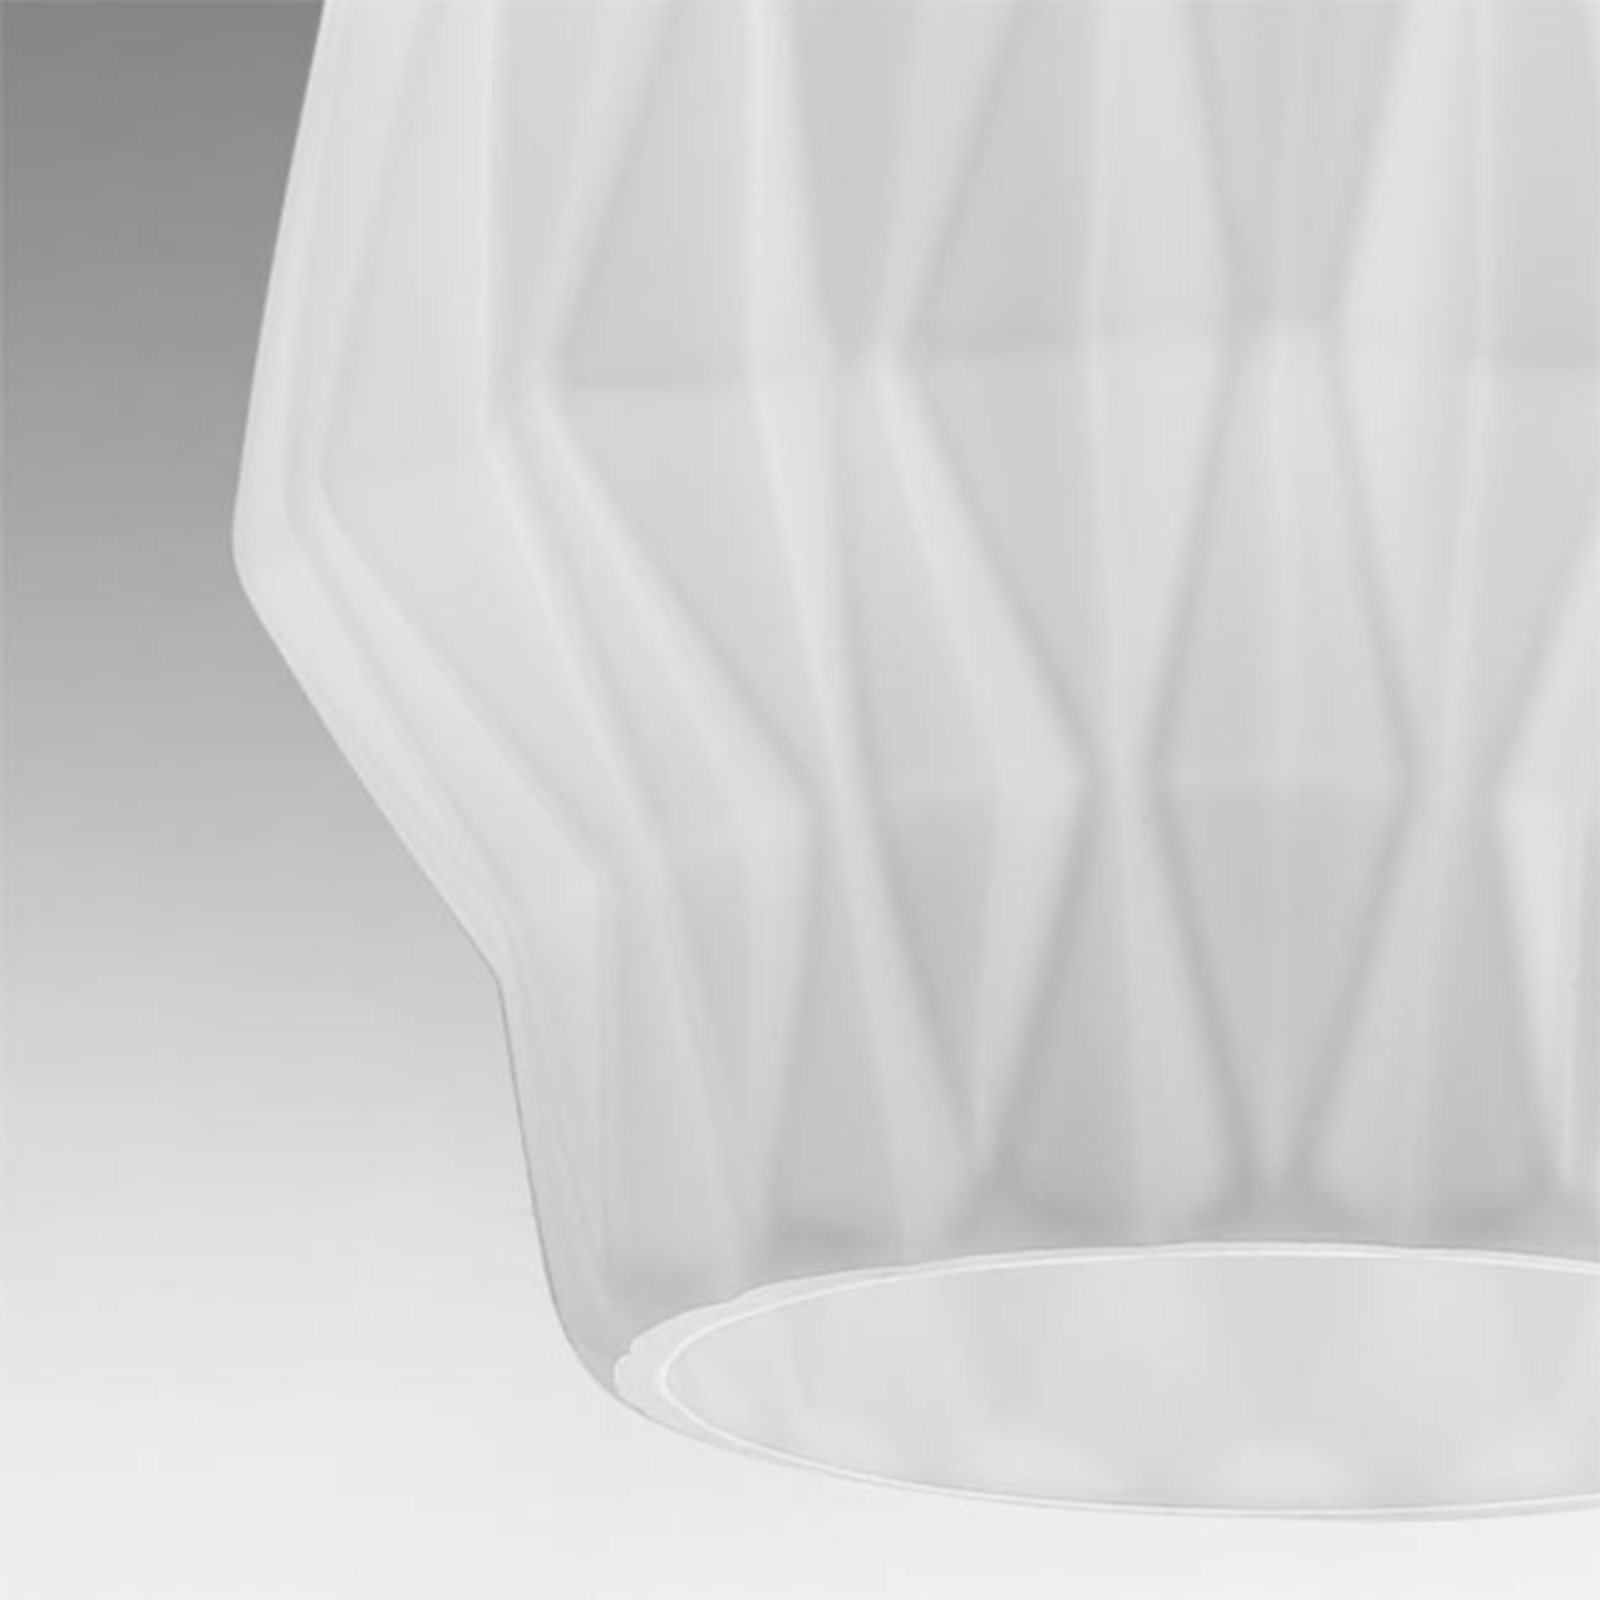 Origami pendant light made of glass, white